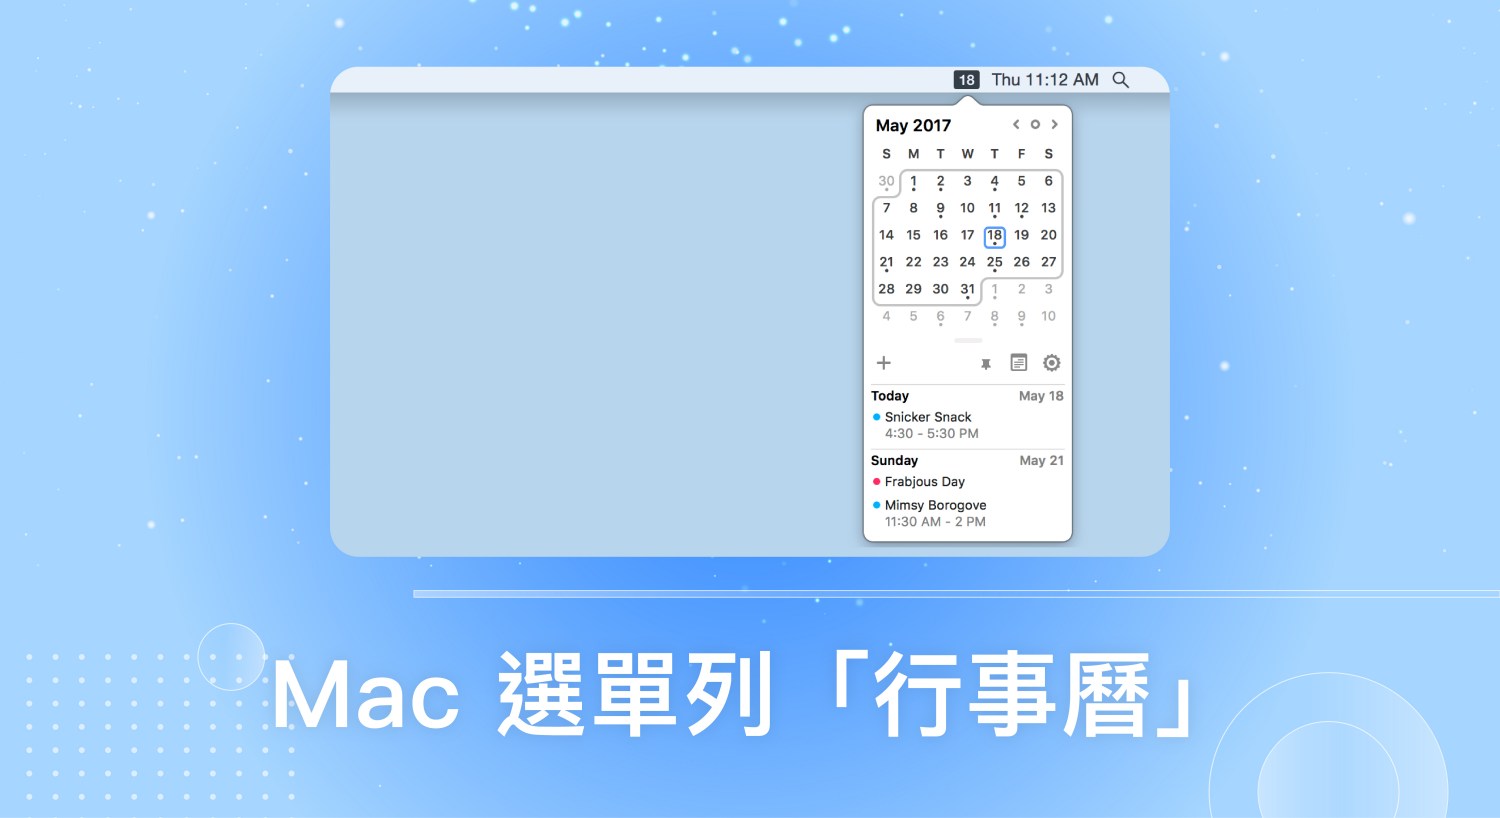 Mac 行事曆小工具 Itsycal，在「選單列」顯示日曆與行程